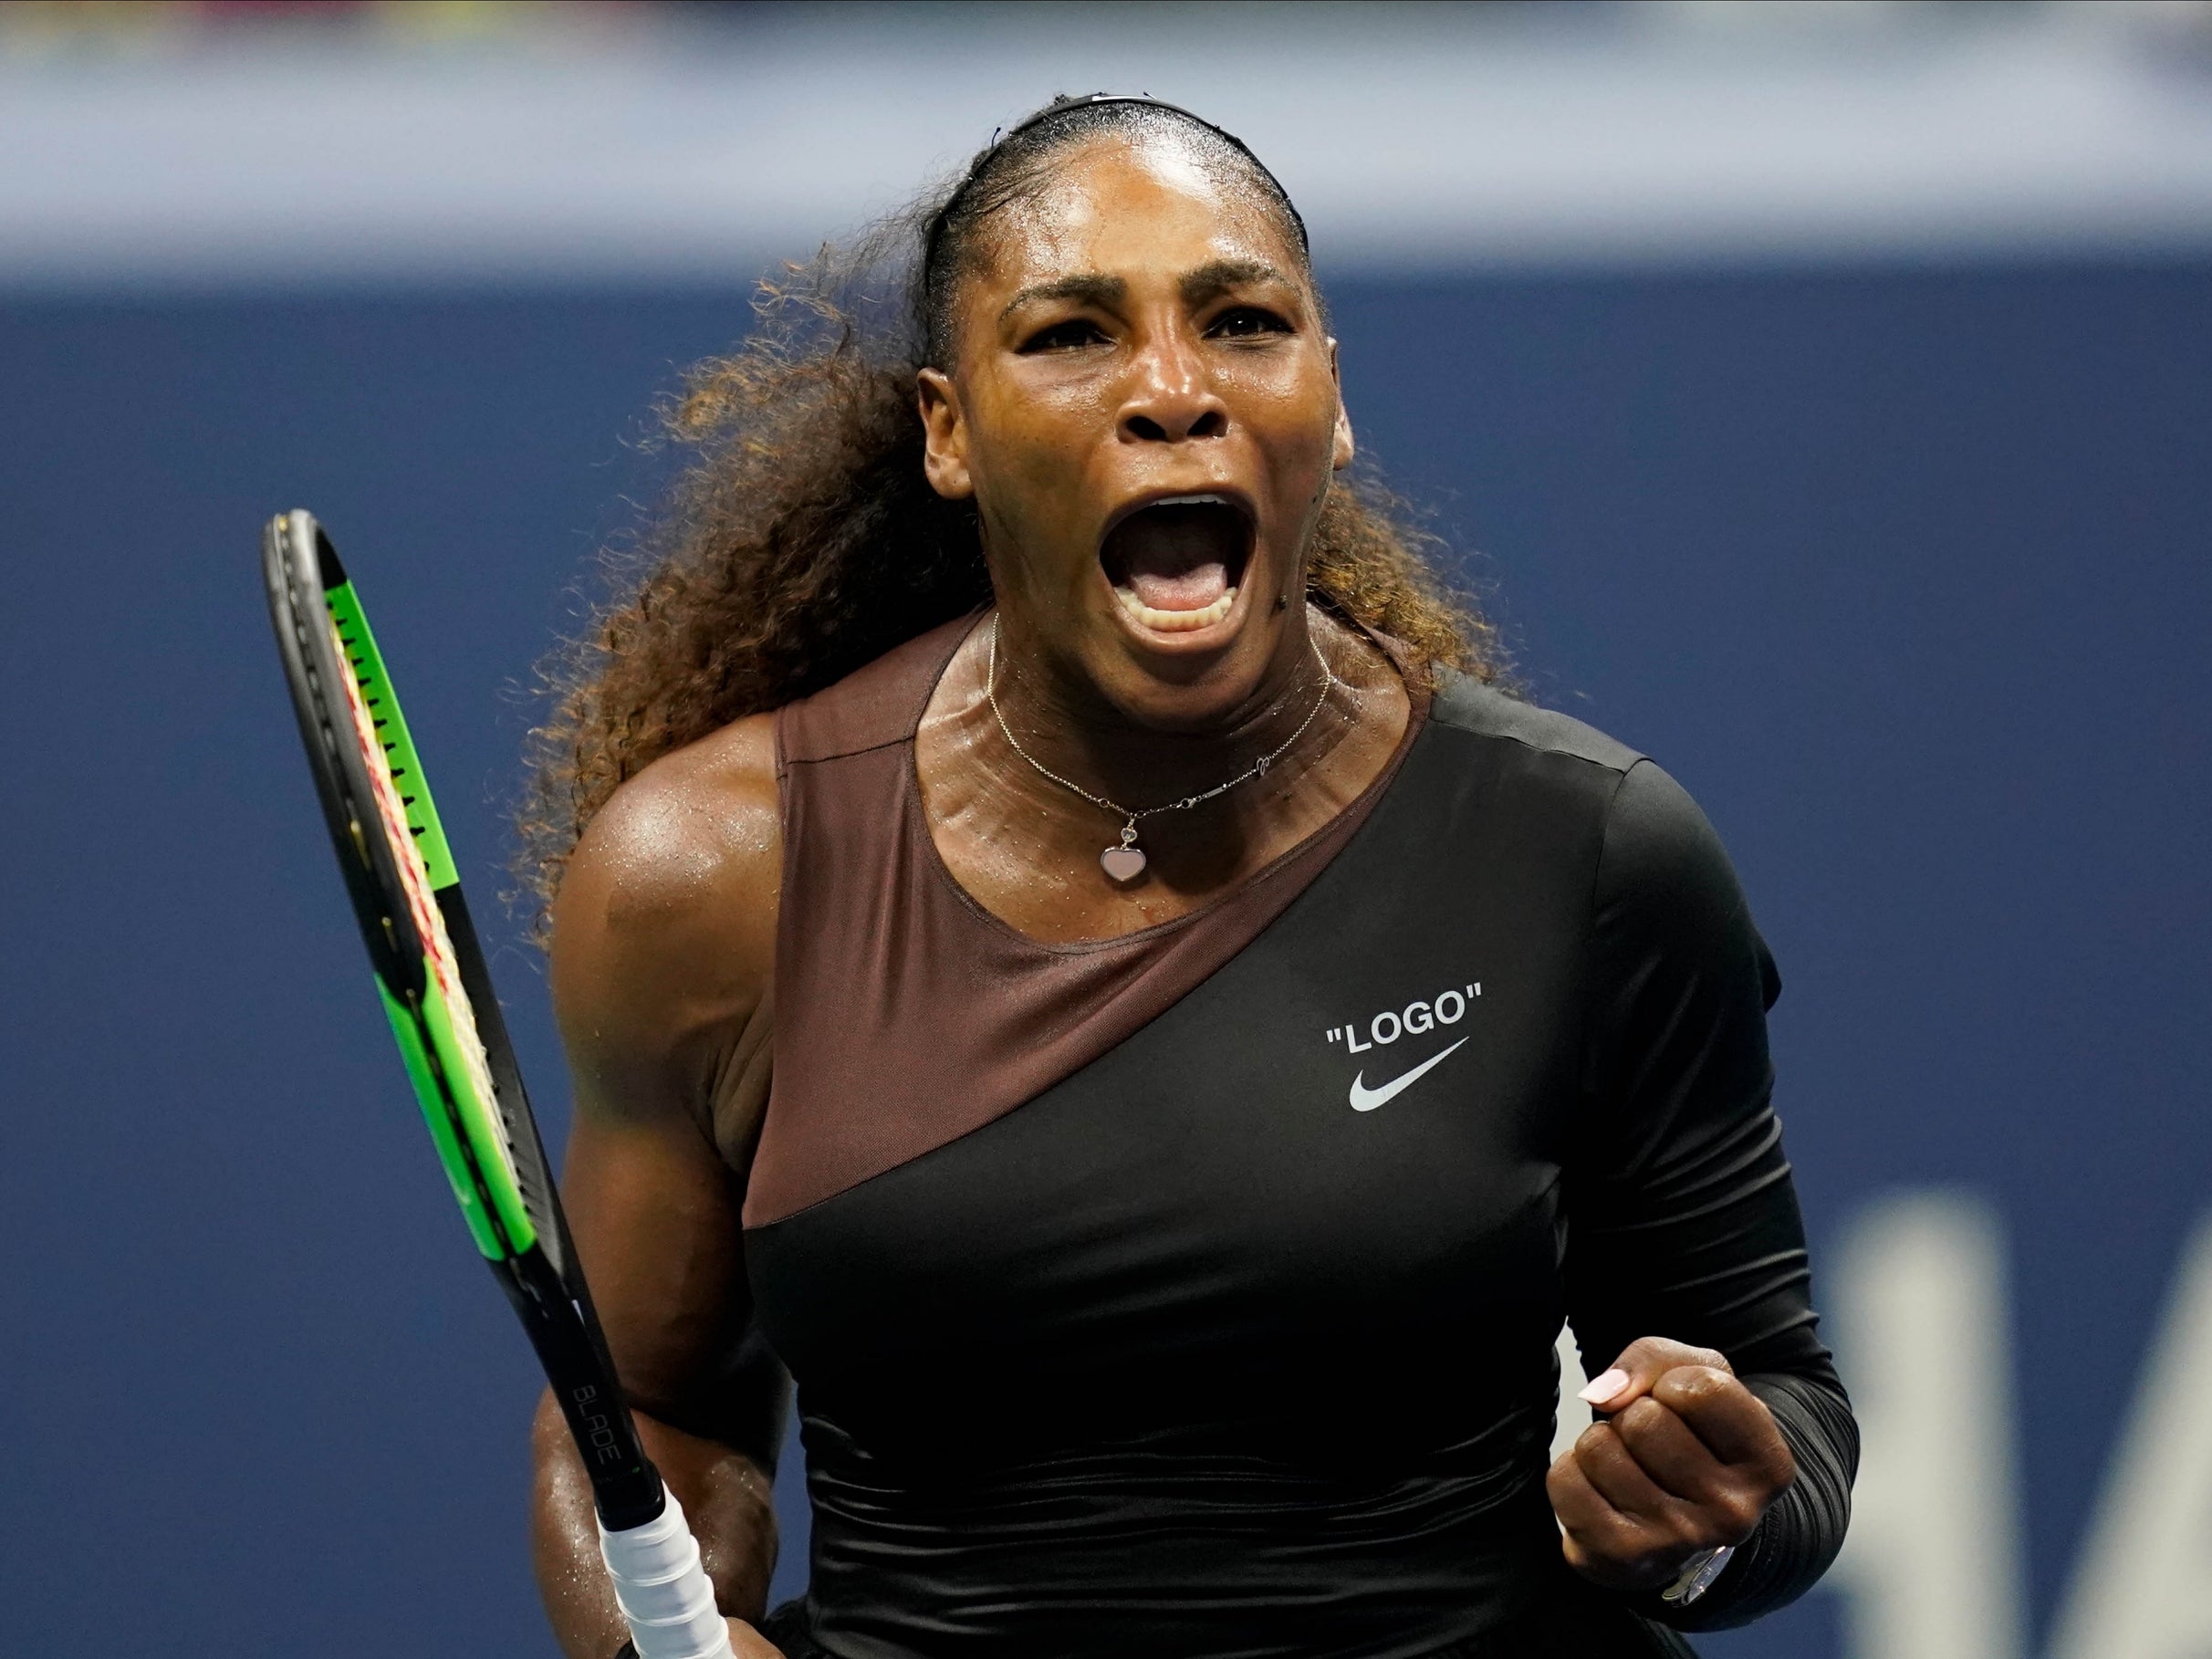 Image result for Serena Williams